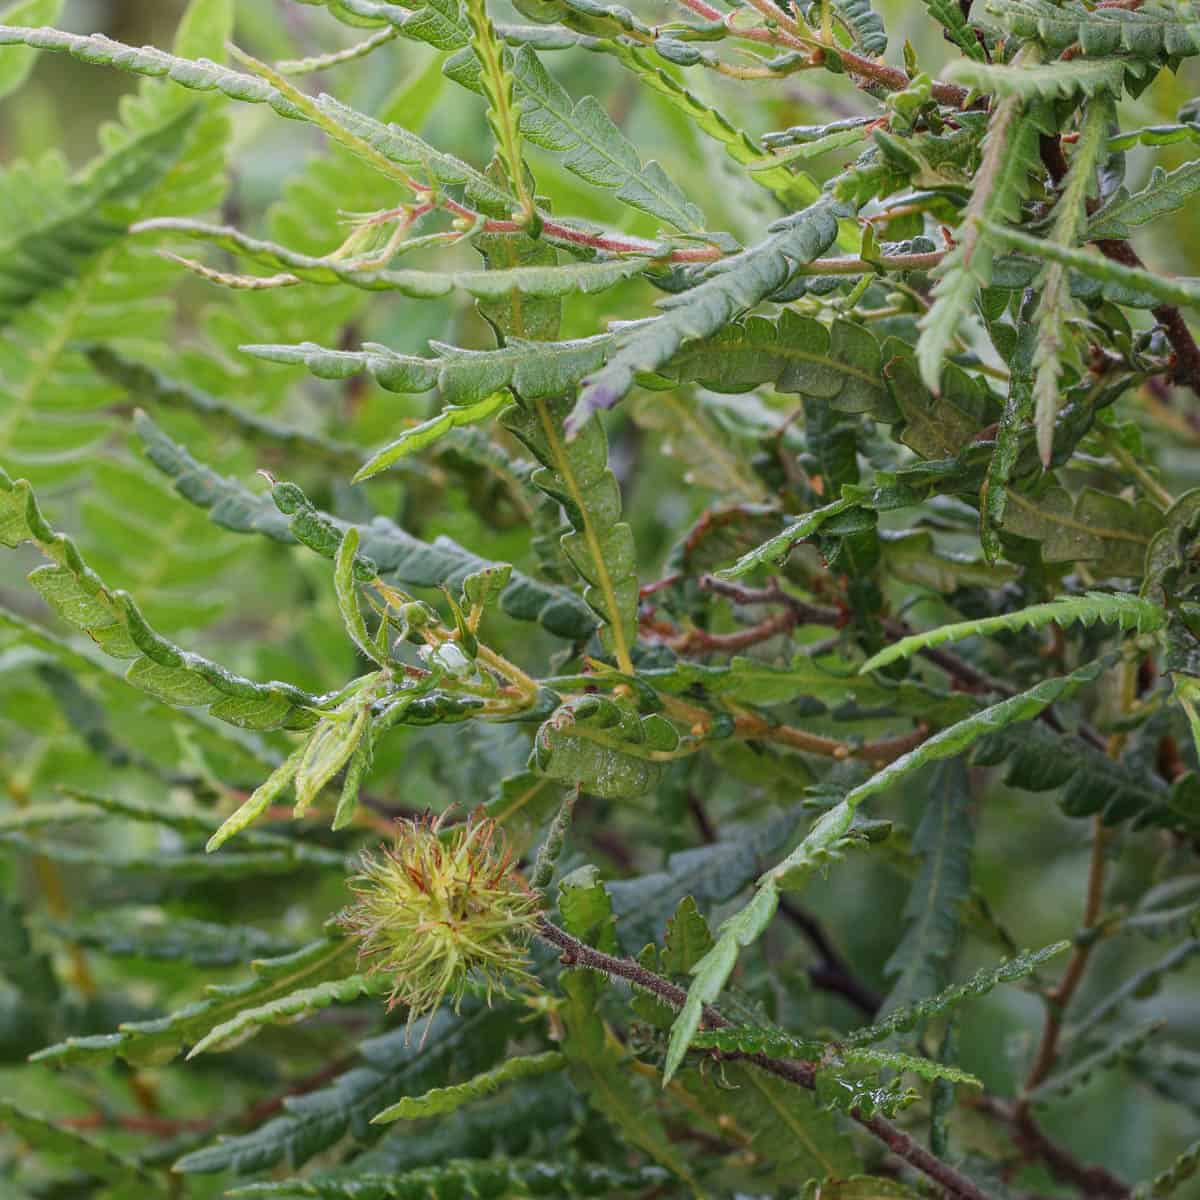 Sweetfern or Comptonia peregrina outside 